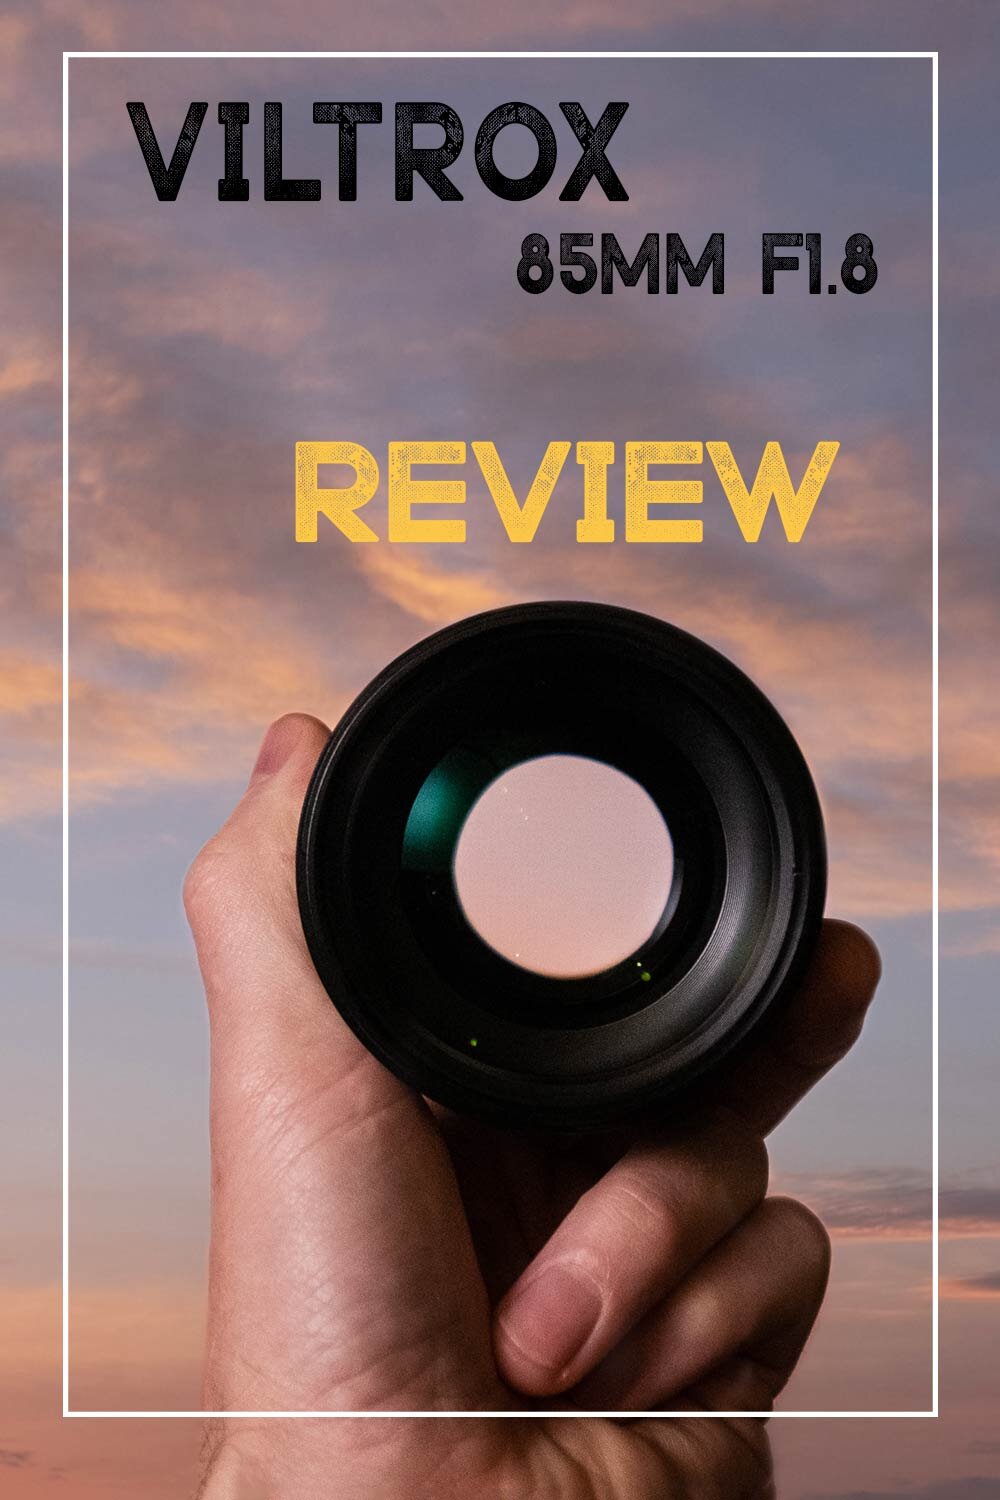 Viltrox 85mm f1.8 lens review — IAN WORTH